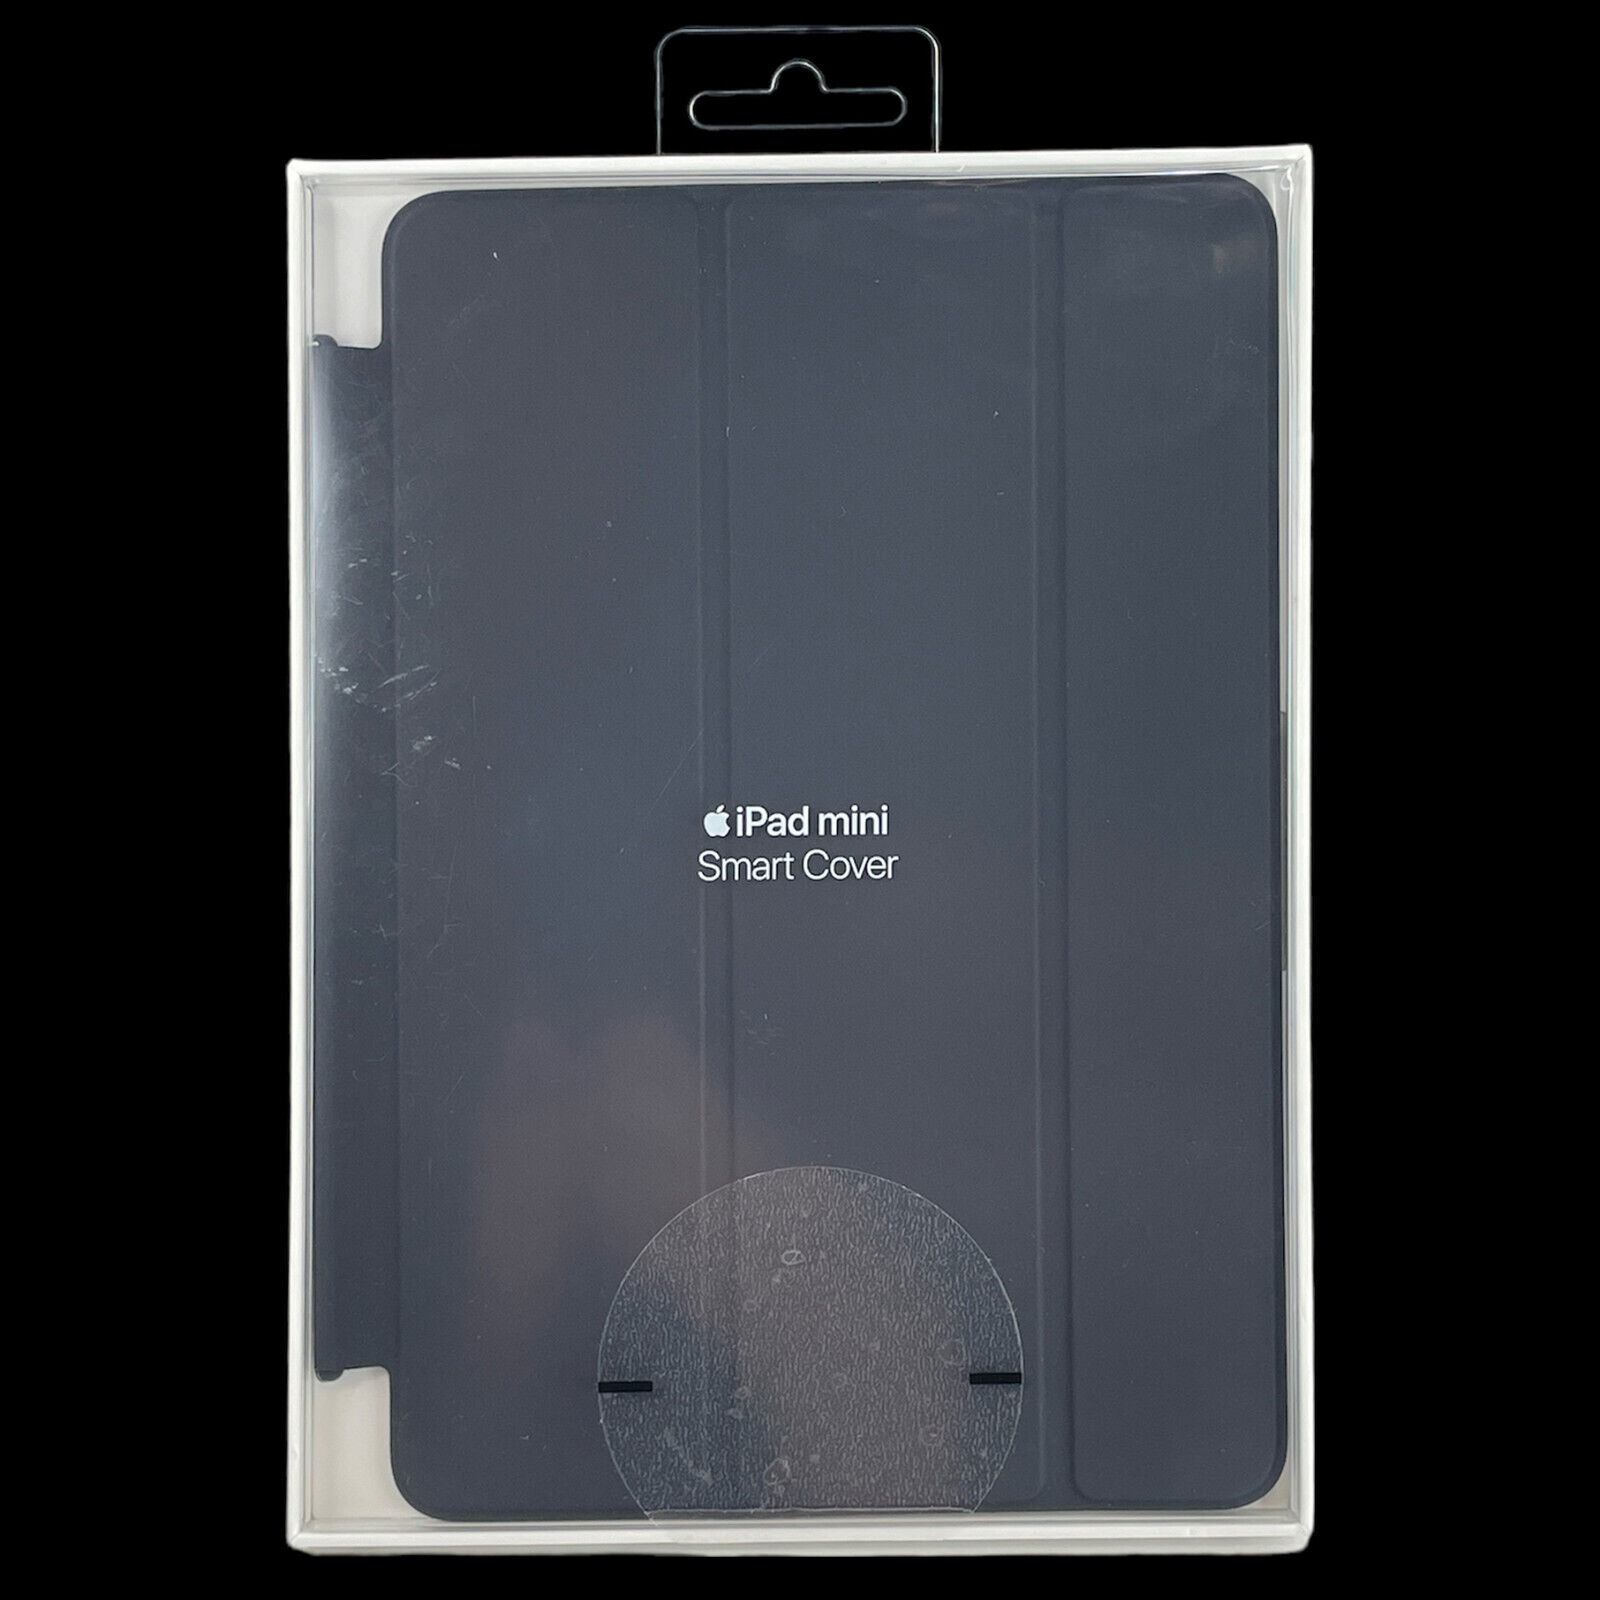 Original Apple iPad mini 4 / mini 5 Smart Cover Case -  Charcoal Gray MVQD2ZM/A